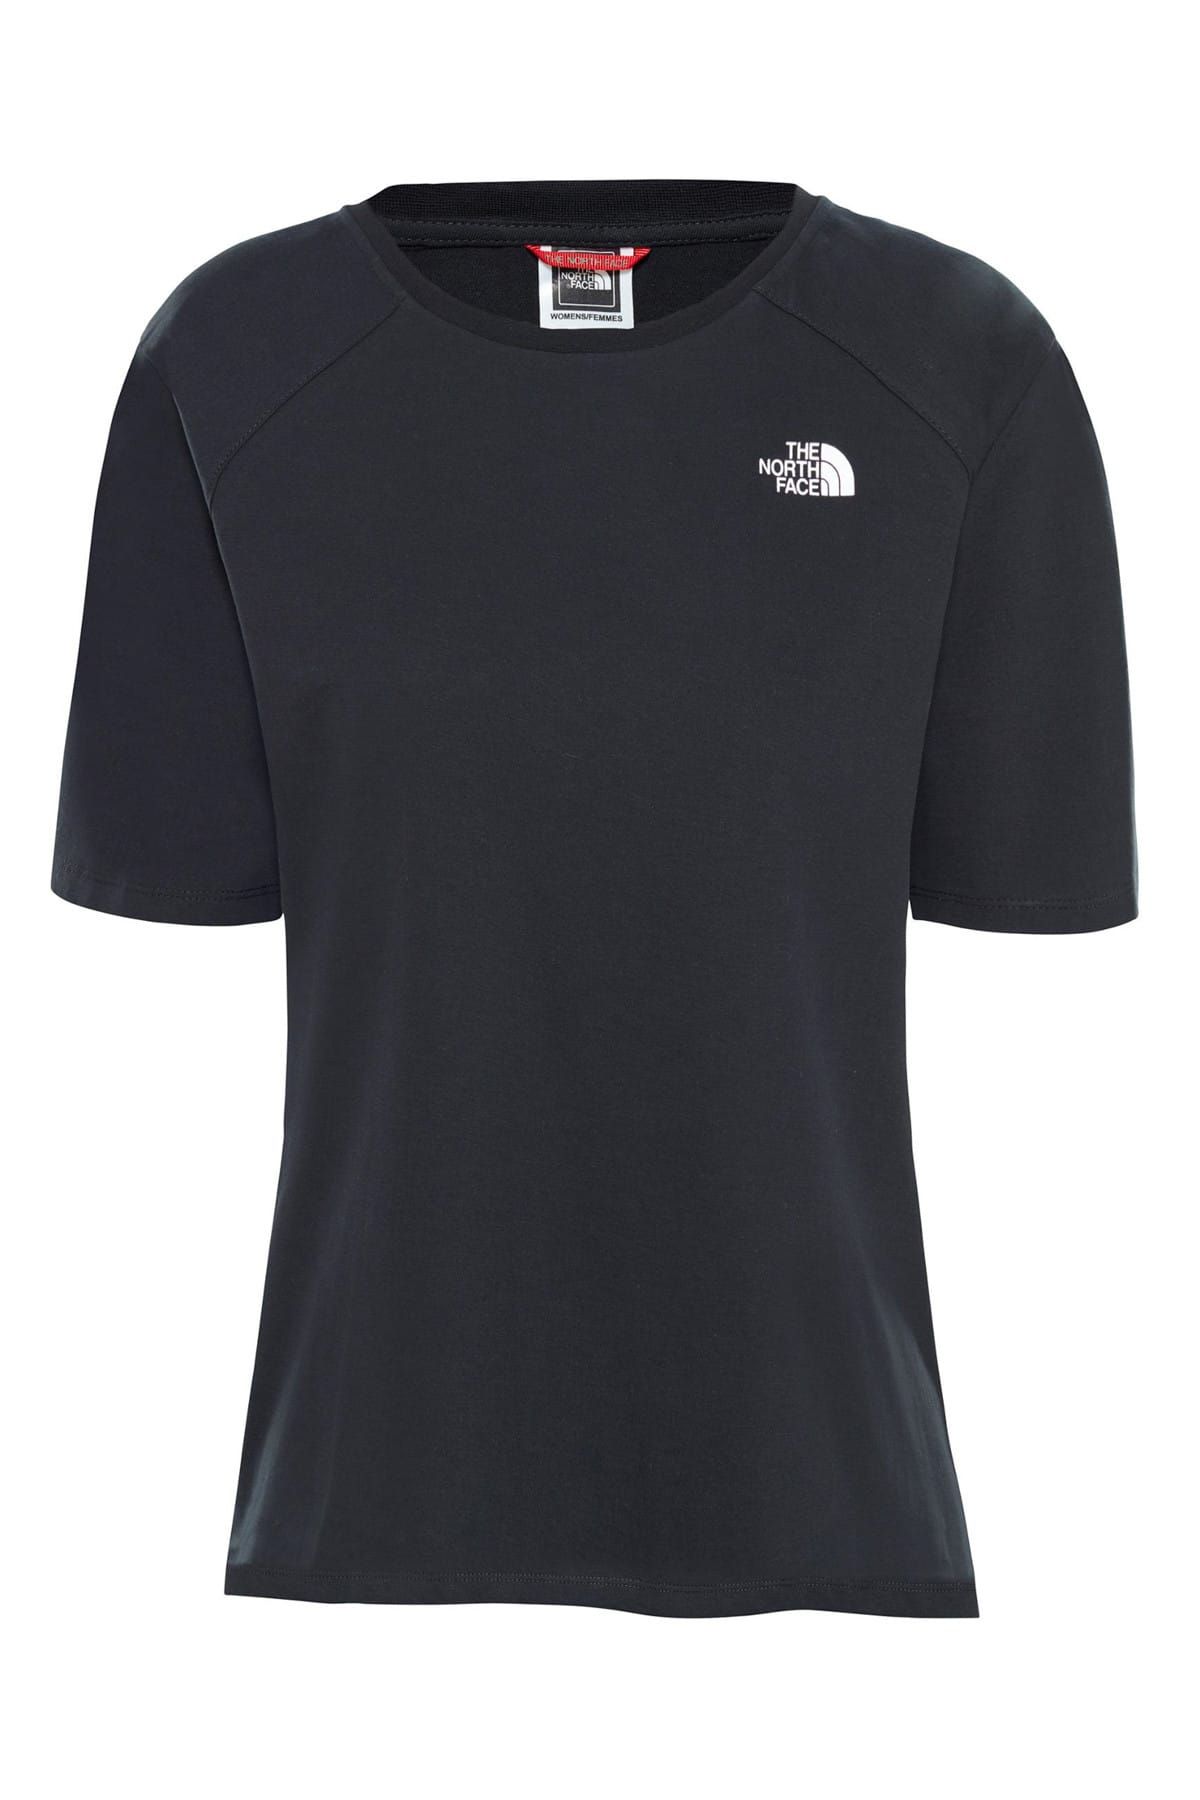 The North Face W S/S PREMIUM SIMPLE DOME Siyah Kadın T-Shirt 100528915